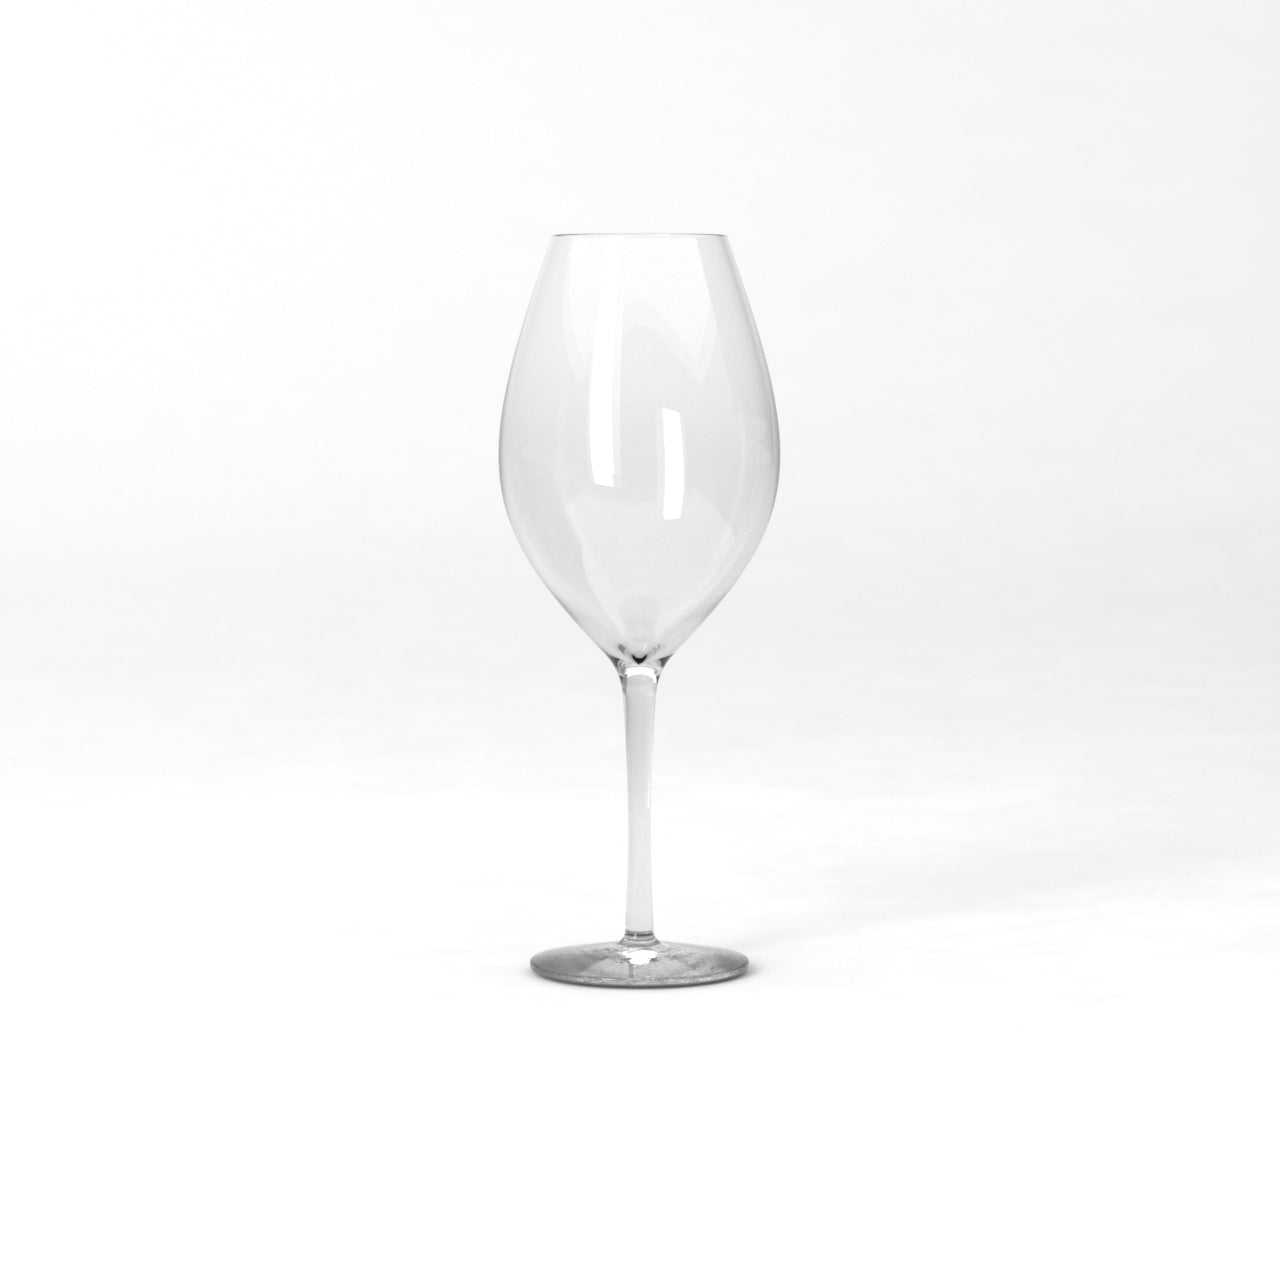 Richard Juhlin white wine glass